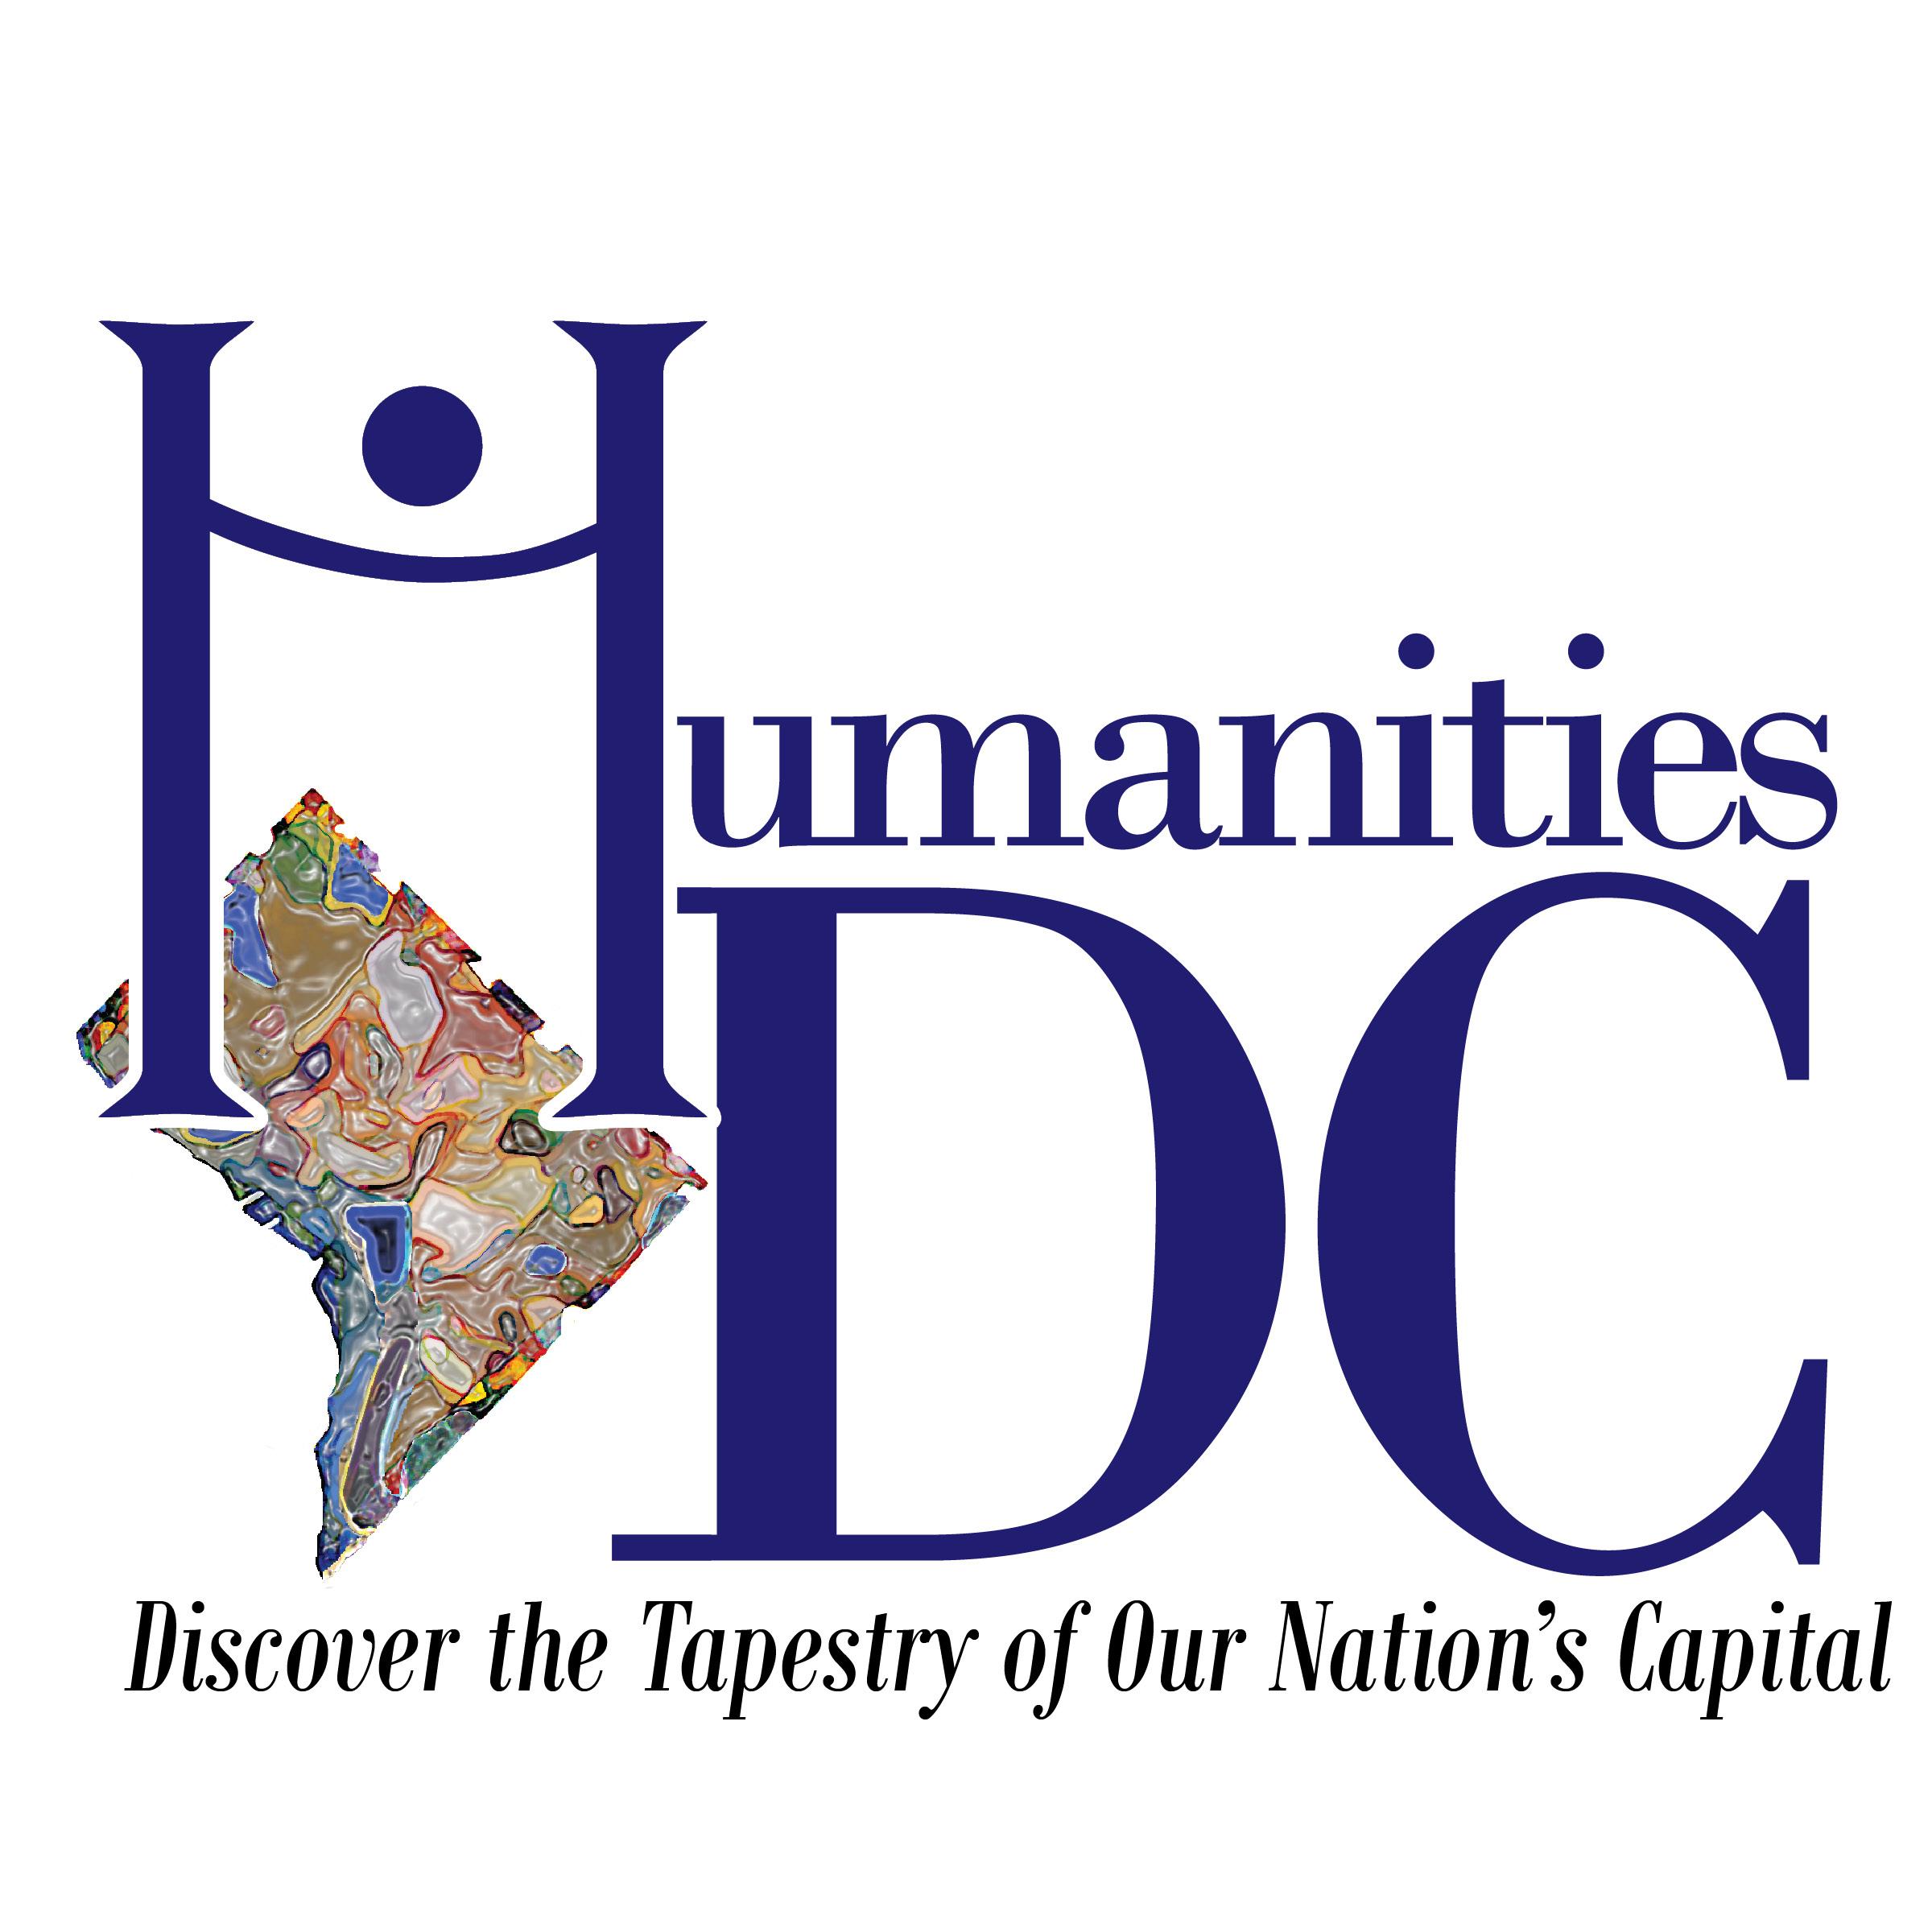 HDC Logo - hdc logo with MAP